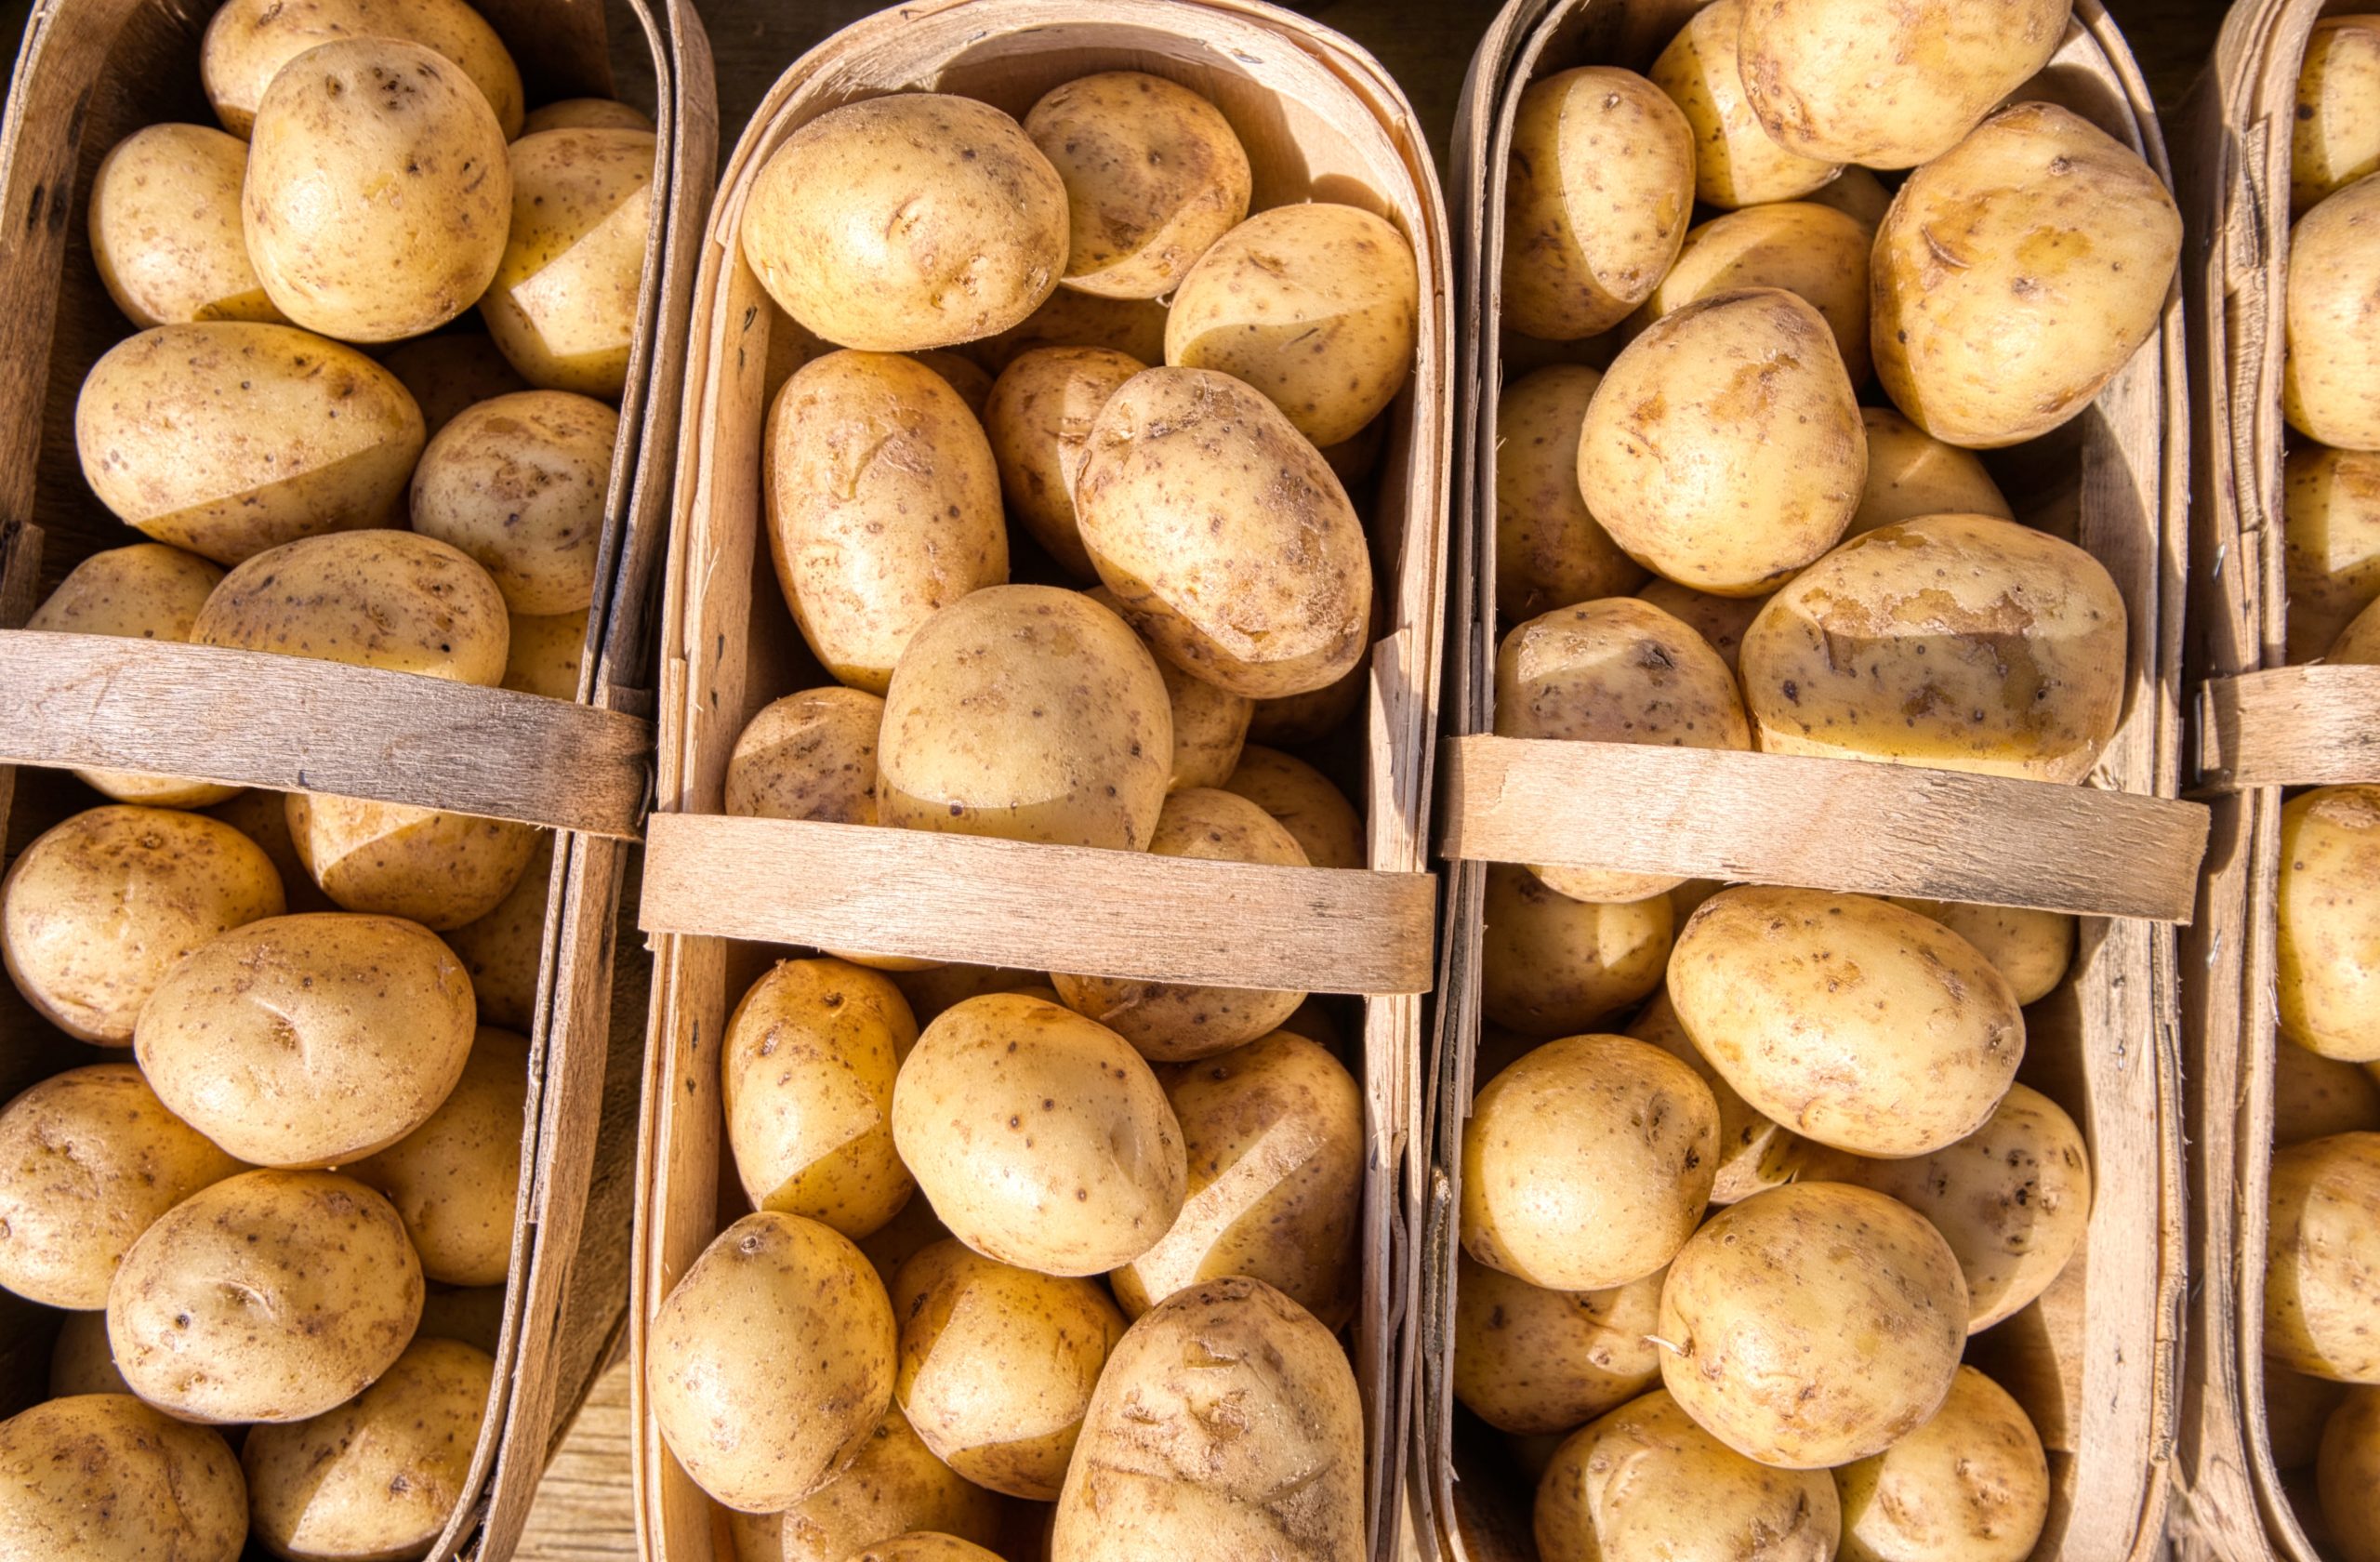 Basket of potatoes. Potatoes are a rich source of potassium. 